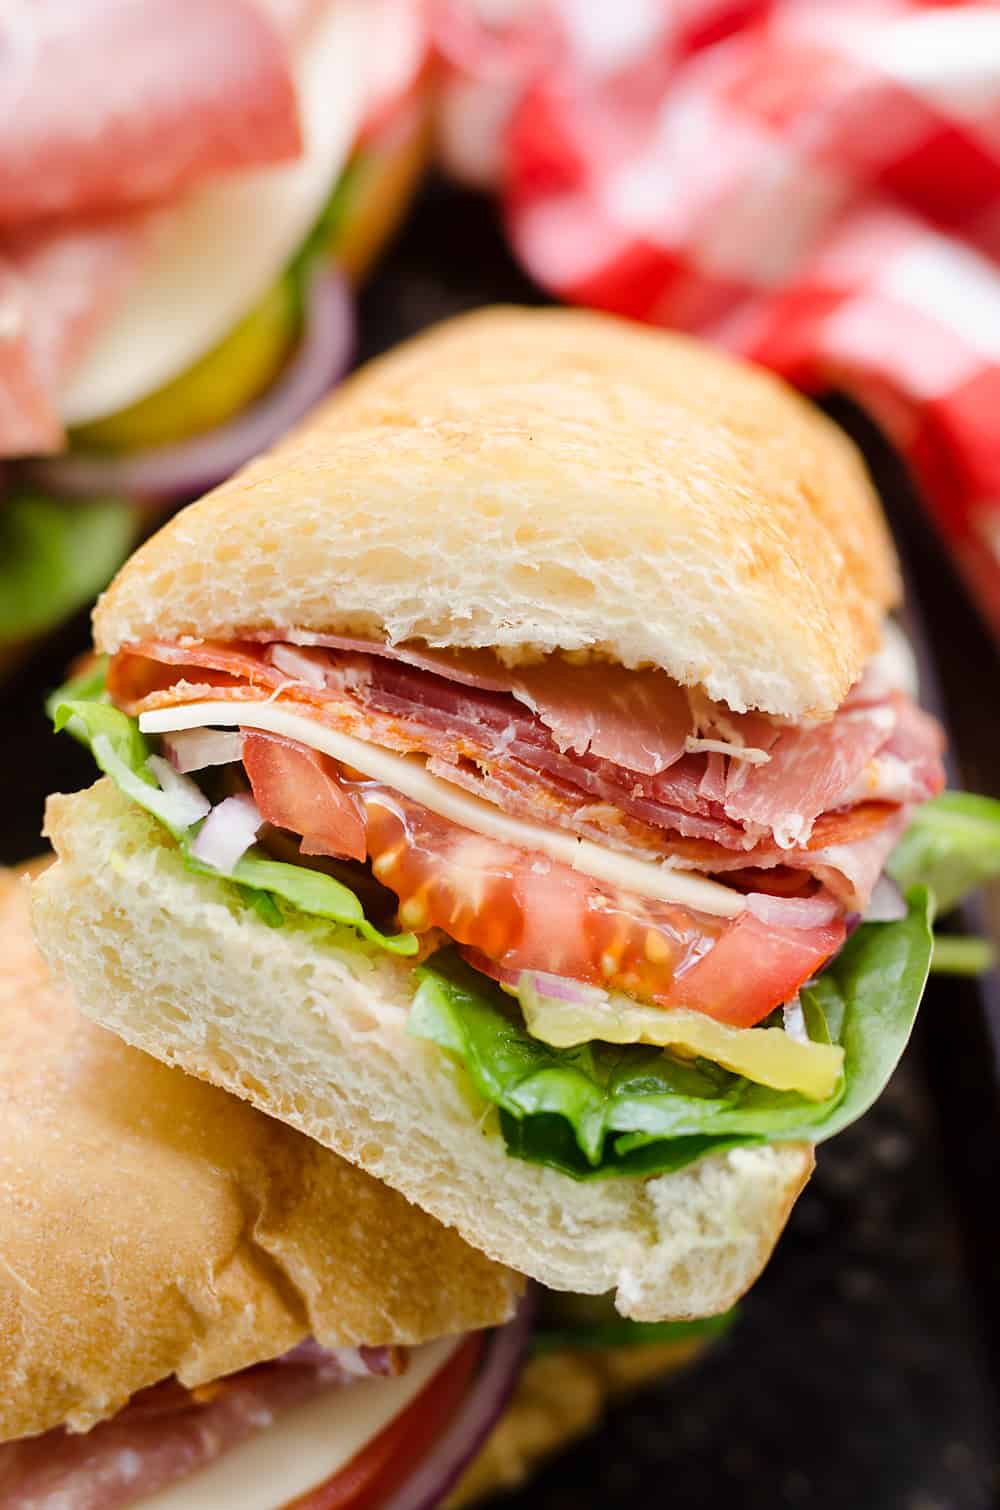 Italian Hero Sub Sandwich sliced in half